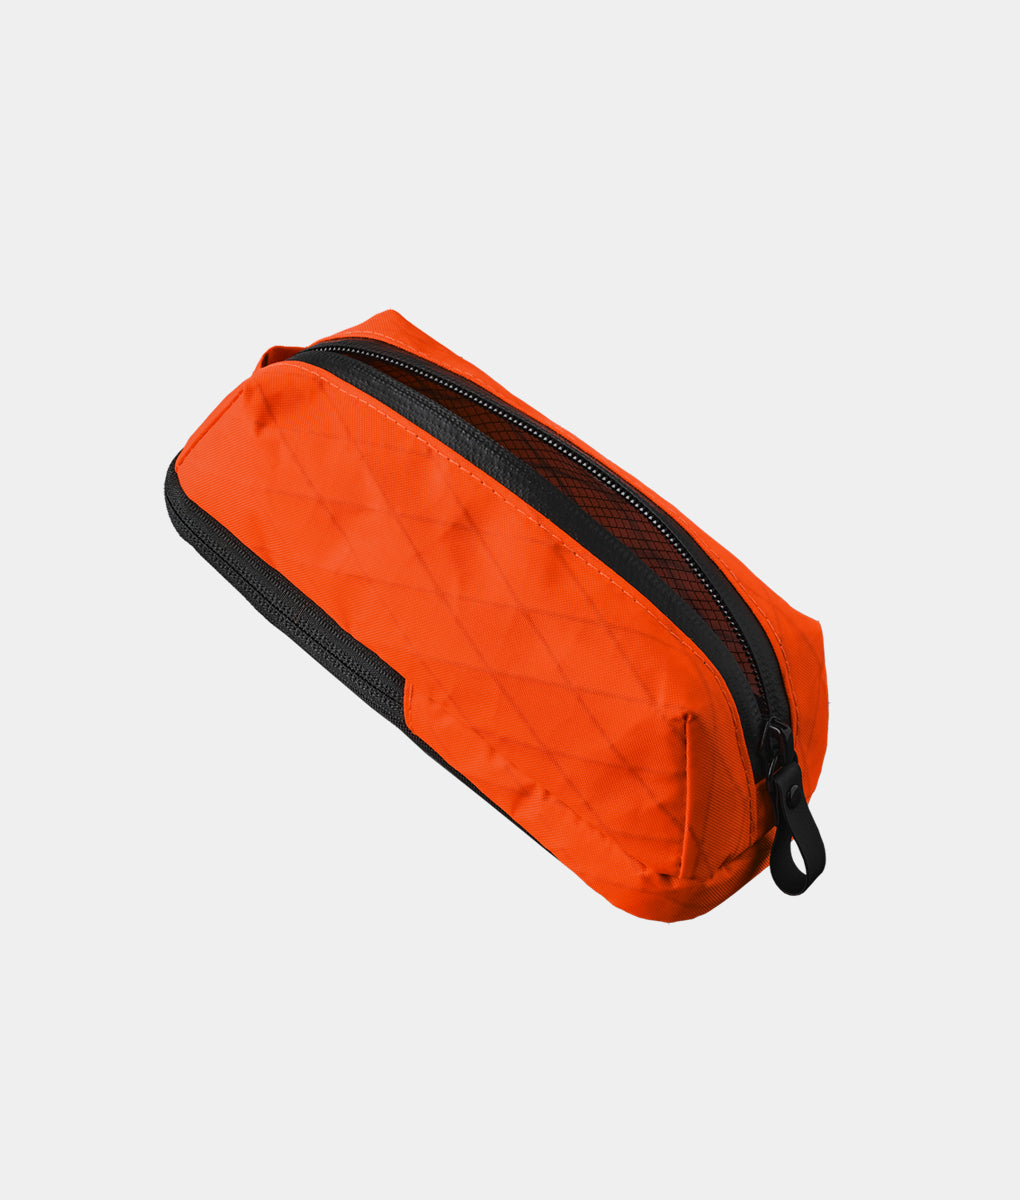 Olive Green Pencil case / Pen case / Pencil pouch / Cosmetic bag